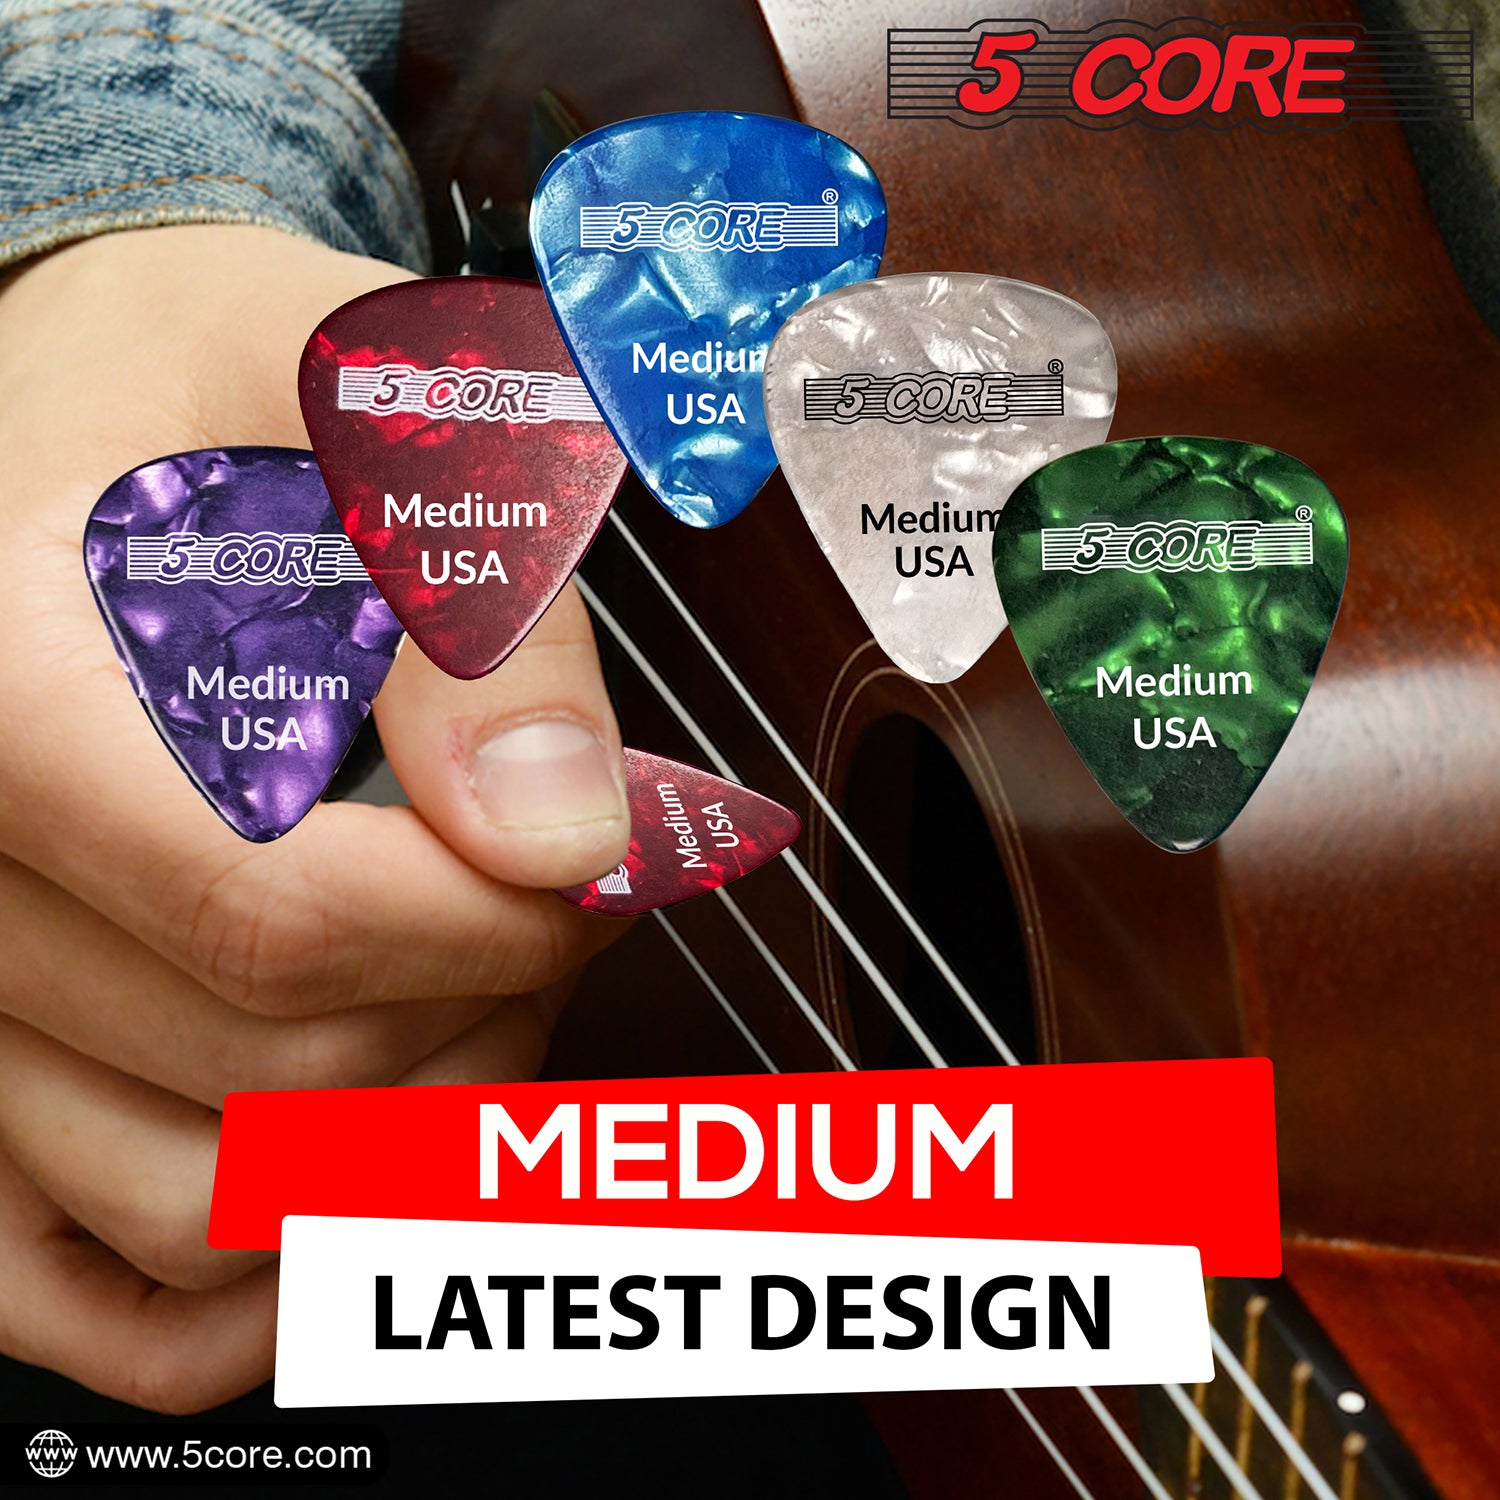 5 Core Celluloid Guitar Pick 12Pack Green  Medium Gauge Plectrums for Acoustic Electric Bass Guitar